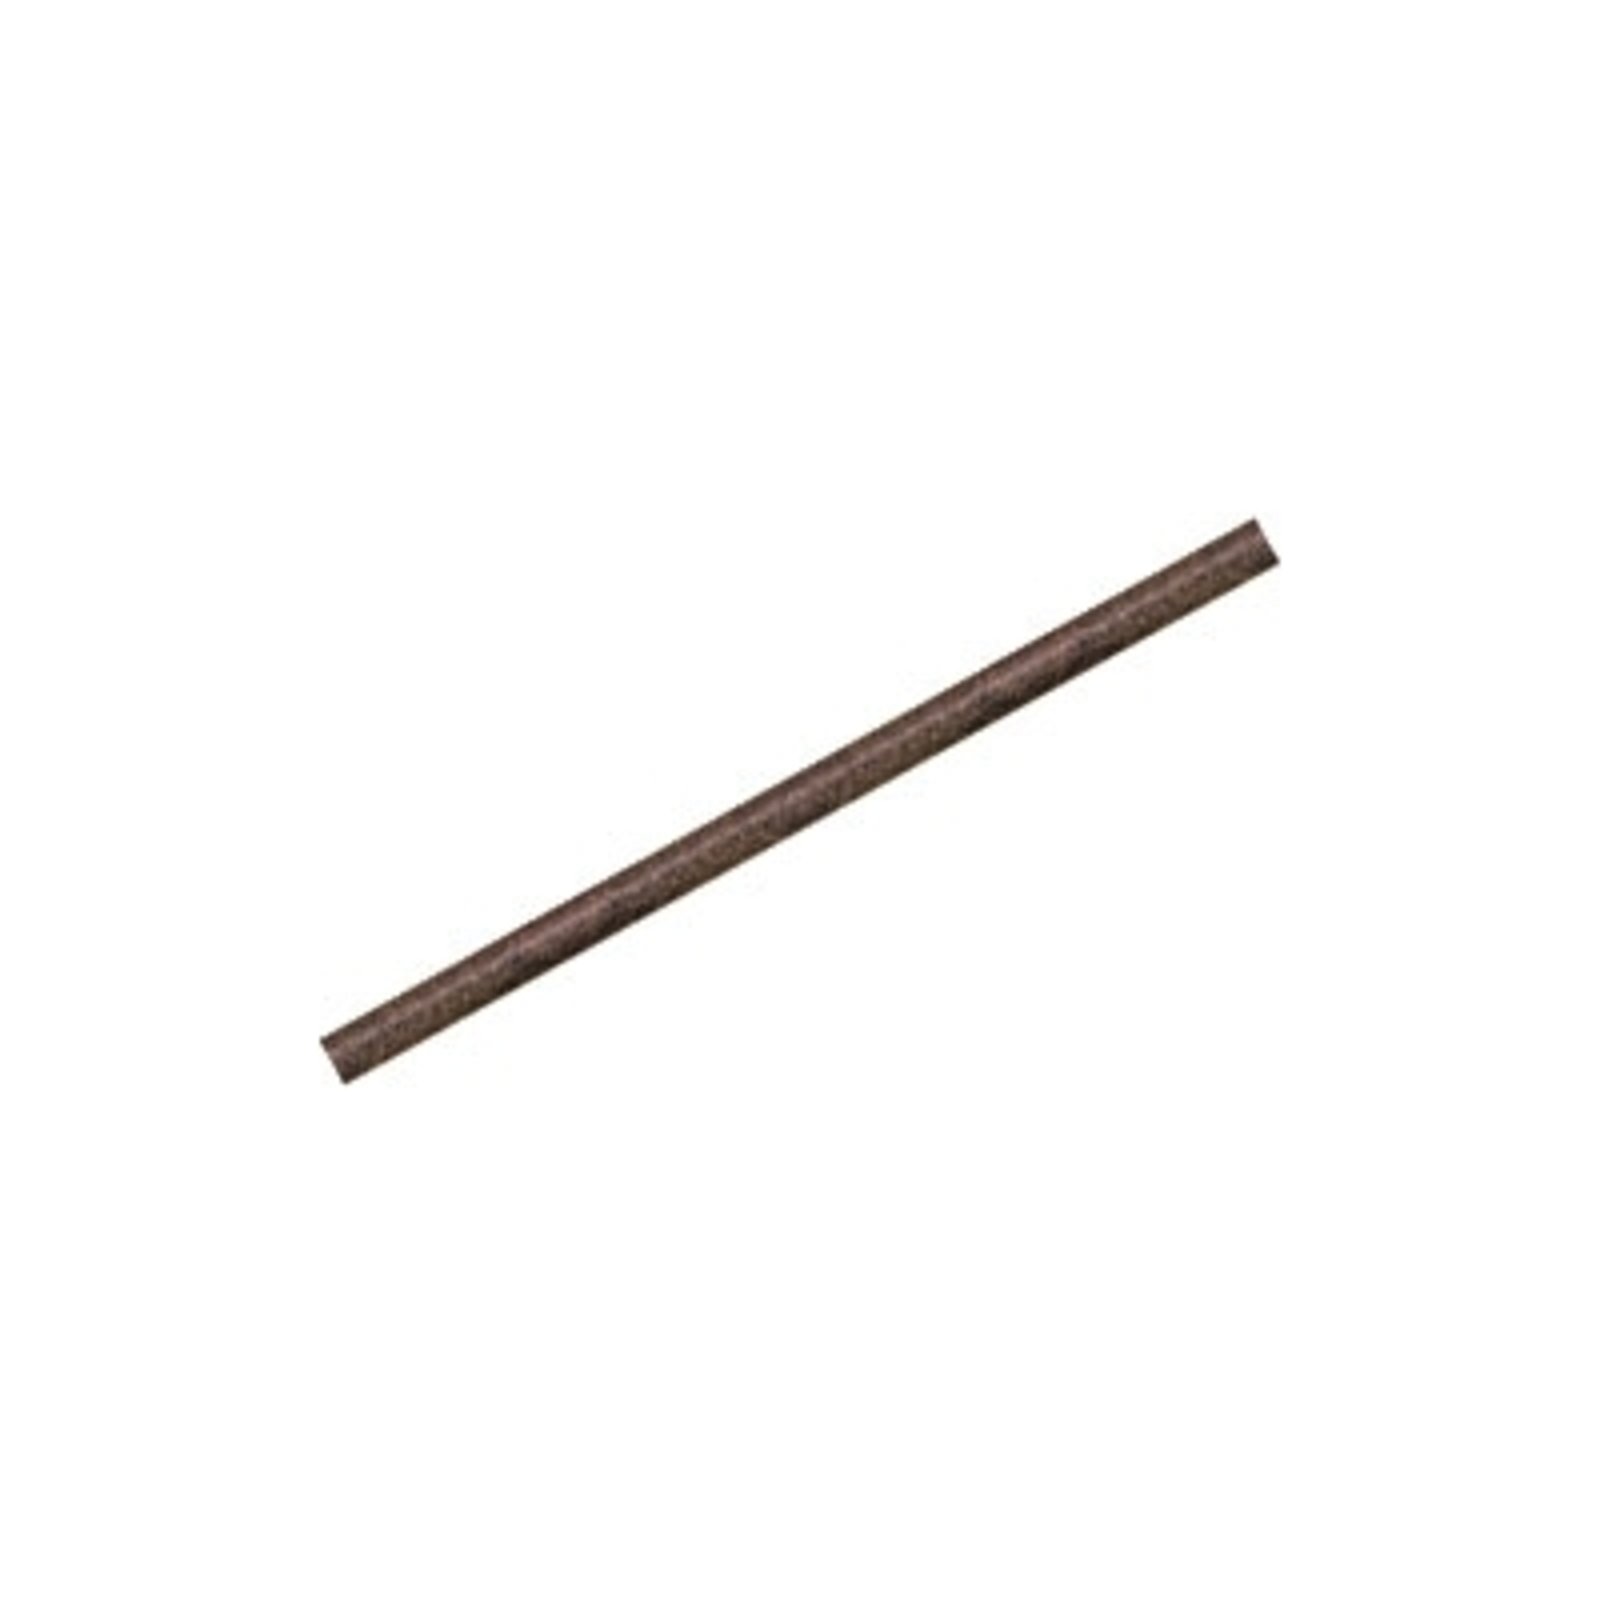 Extension rod antique brown